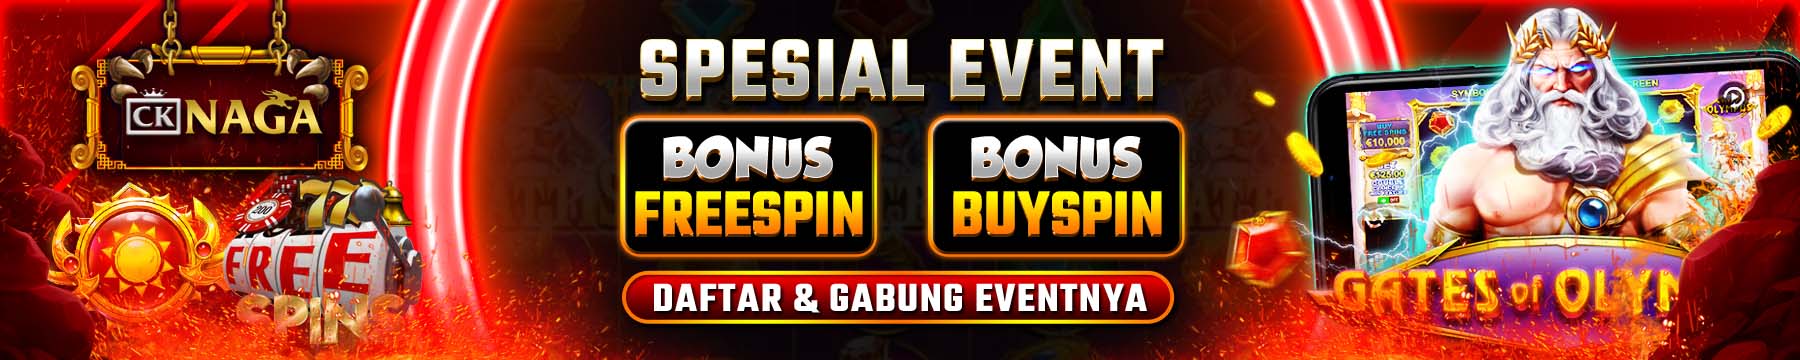 event slot buy spin dan freespin